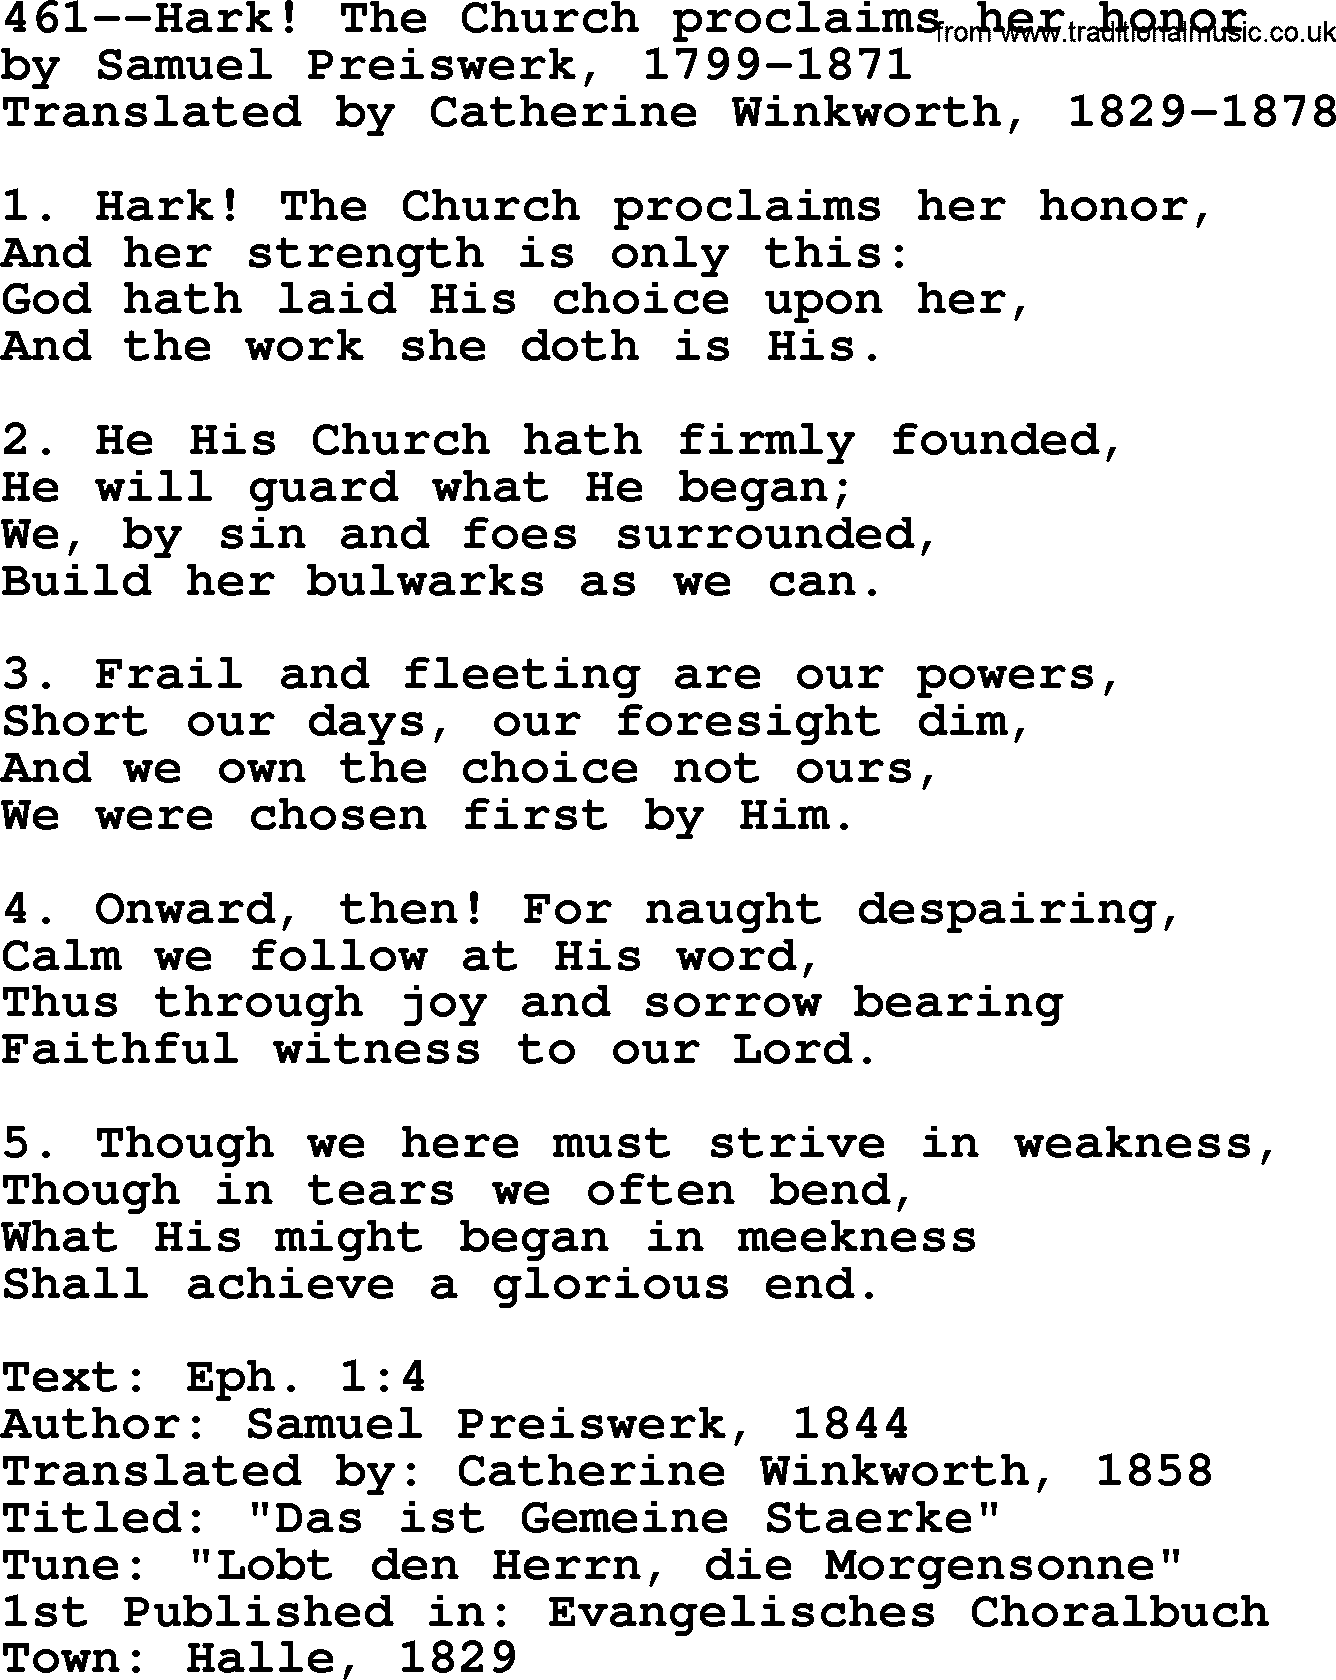 Lutheran Hymn: 461--Hark! The Church proclaims her honor.txt lyrics with PDF